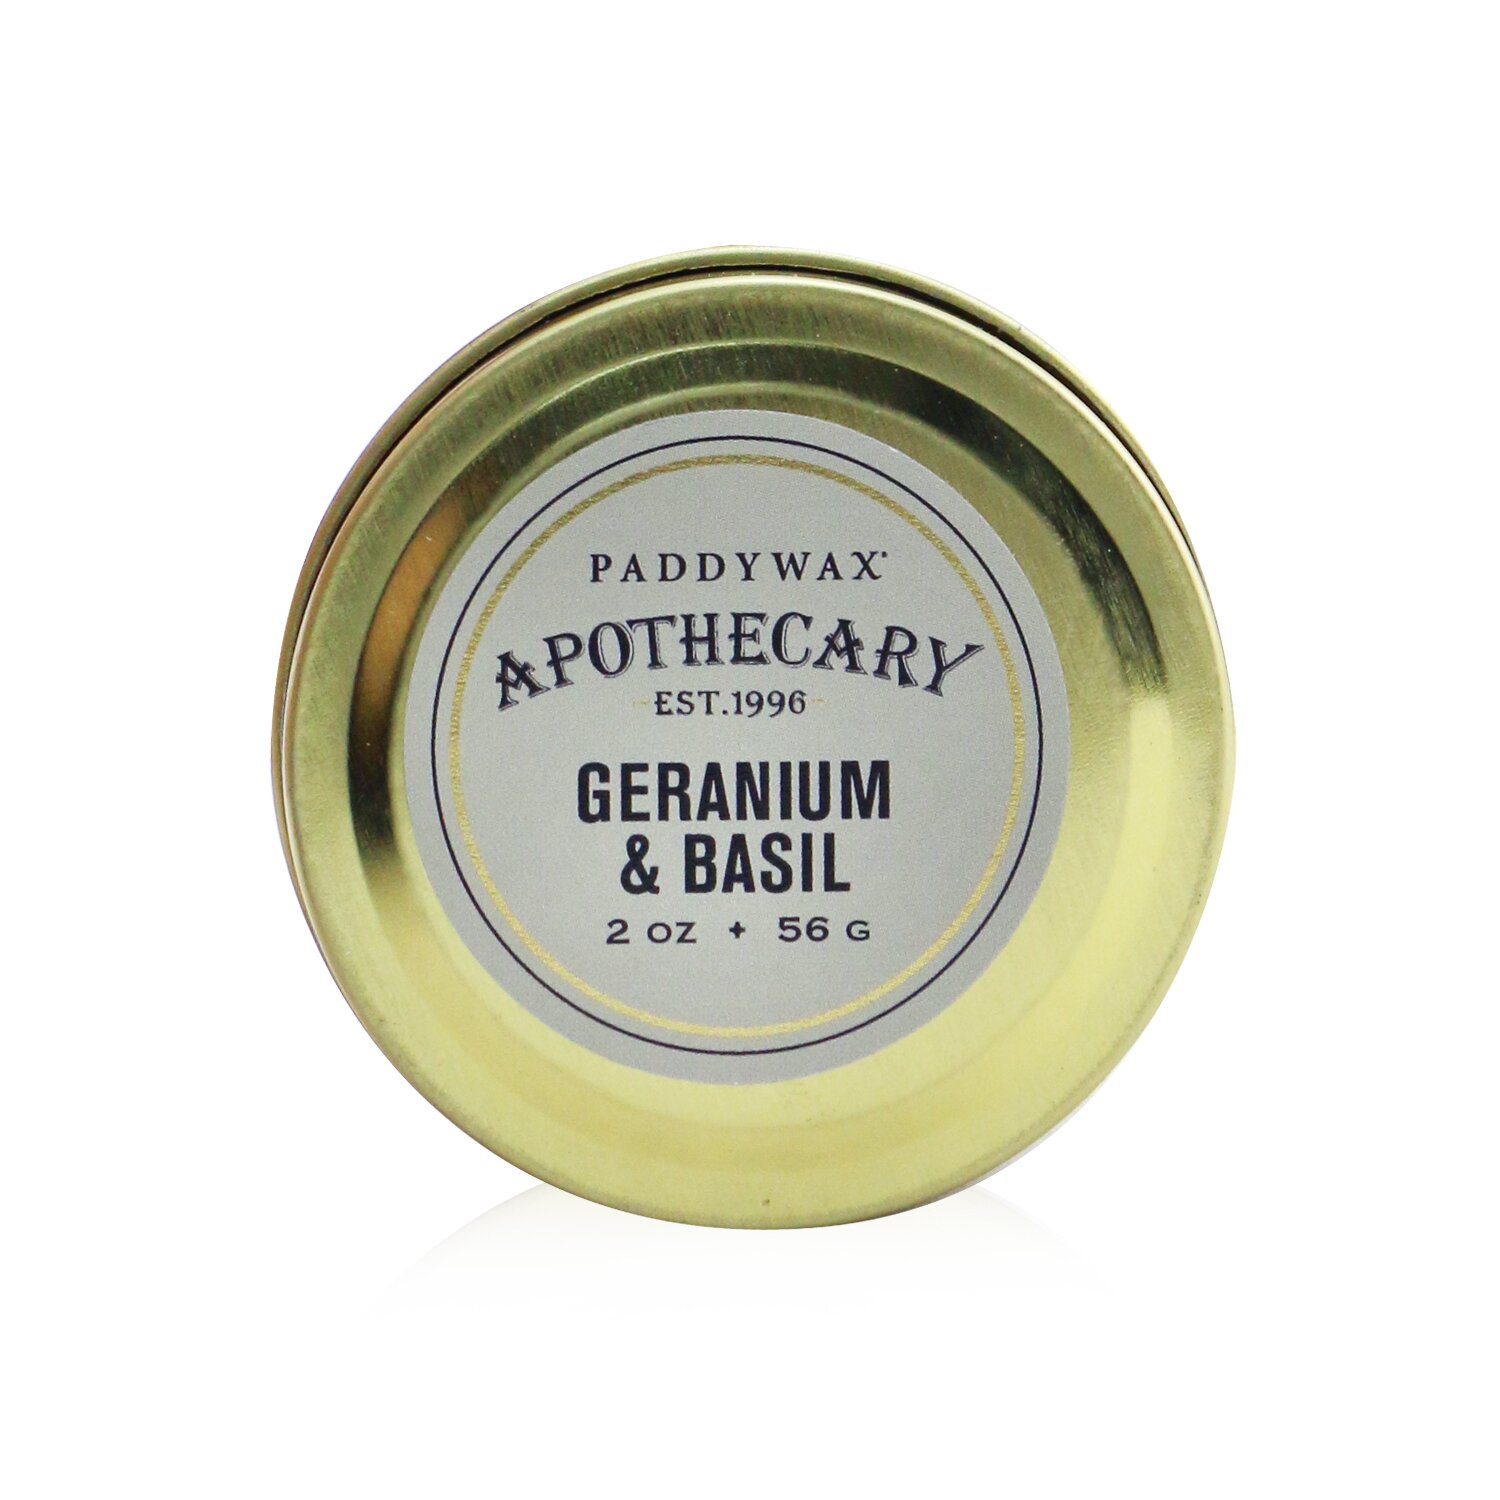 Paddywax - Apothecary 香氛蠟燭 - Geranium & Basil